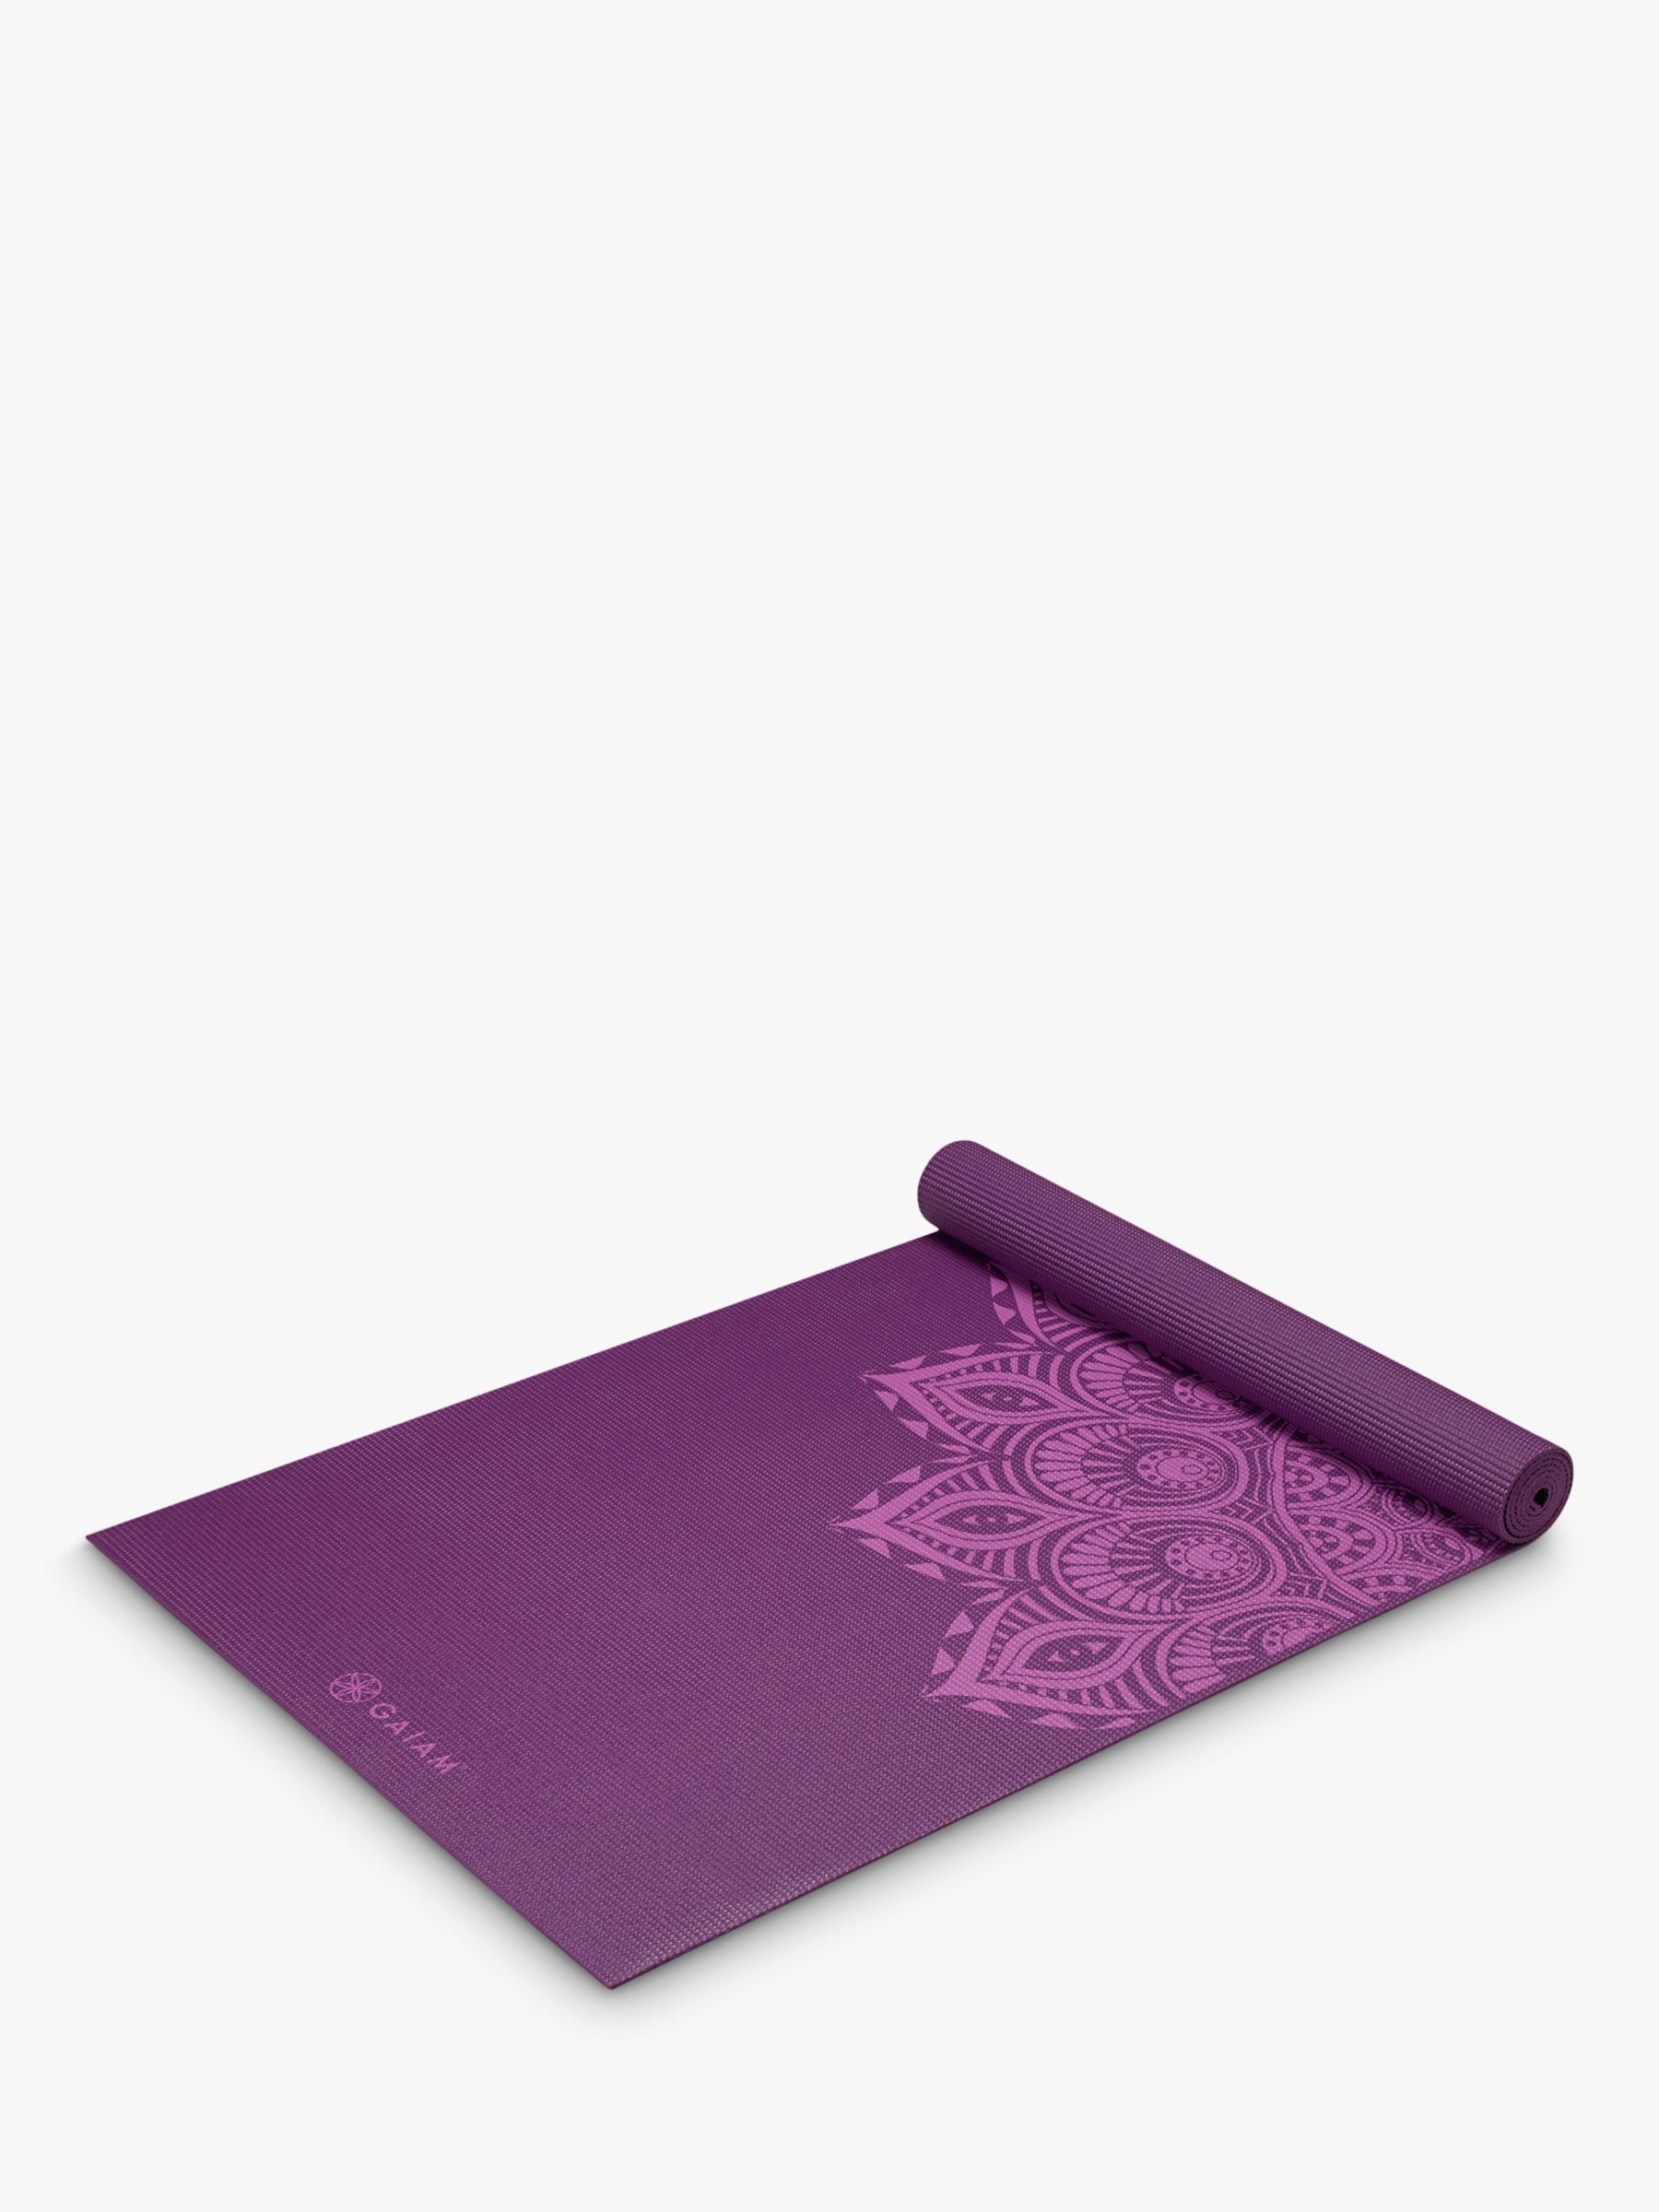 Gaiam Premium Niagara 6mm Yoga Mat- Gaiam Fitness Mats